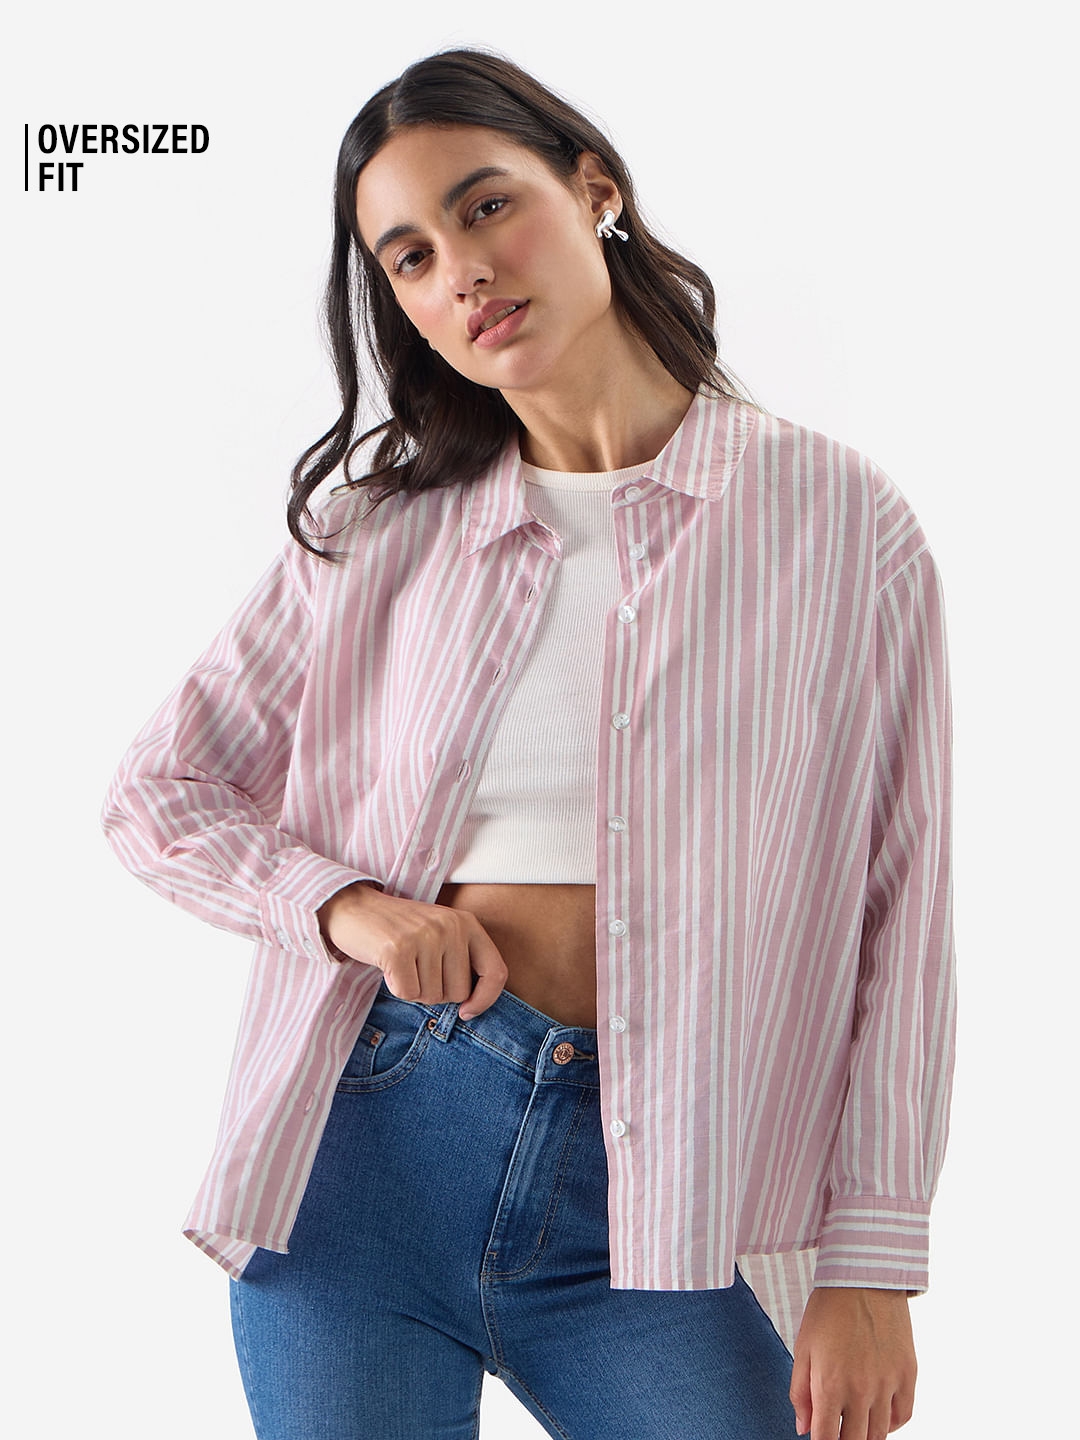 Women's Solids: Coral Stripes Women's Boyfriend Shirts